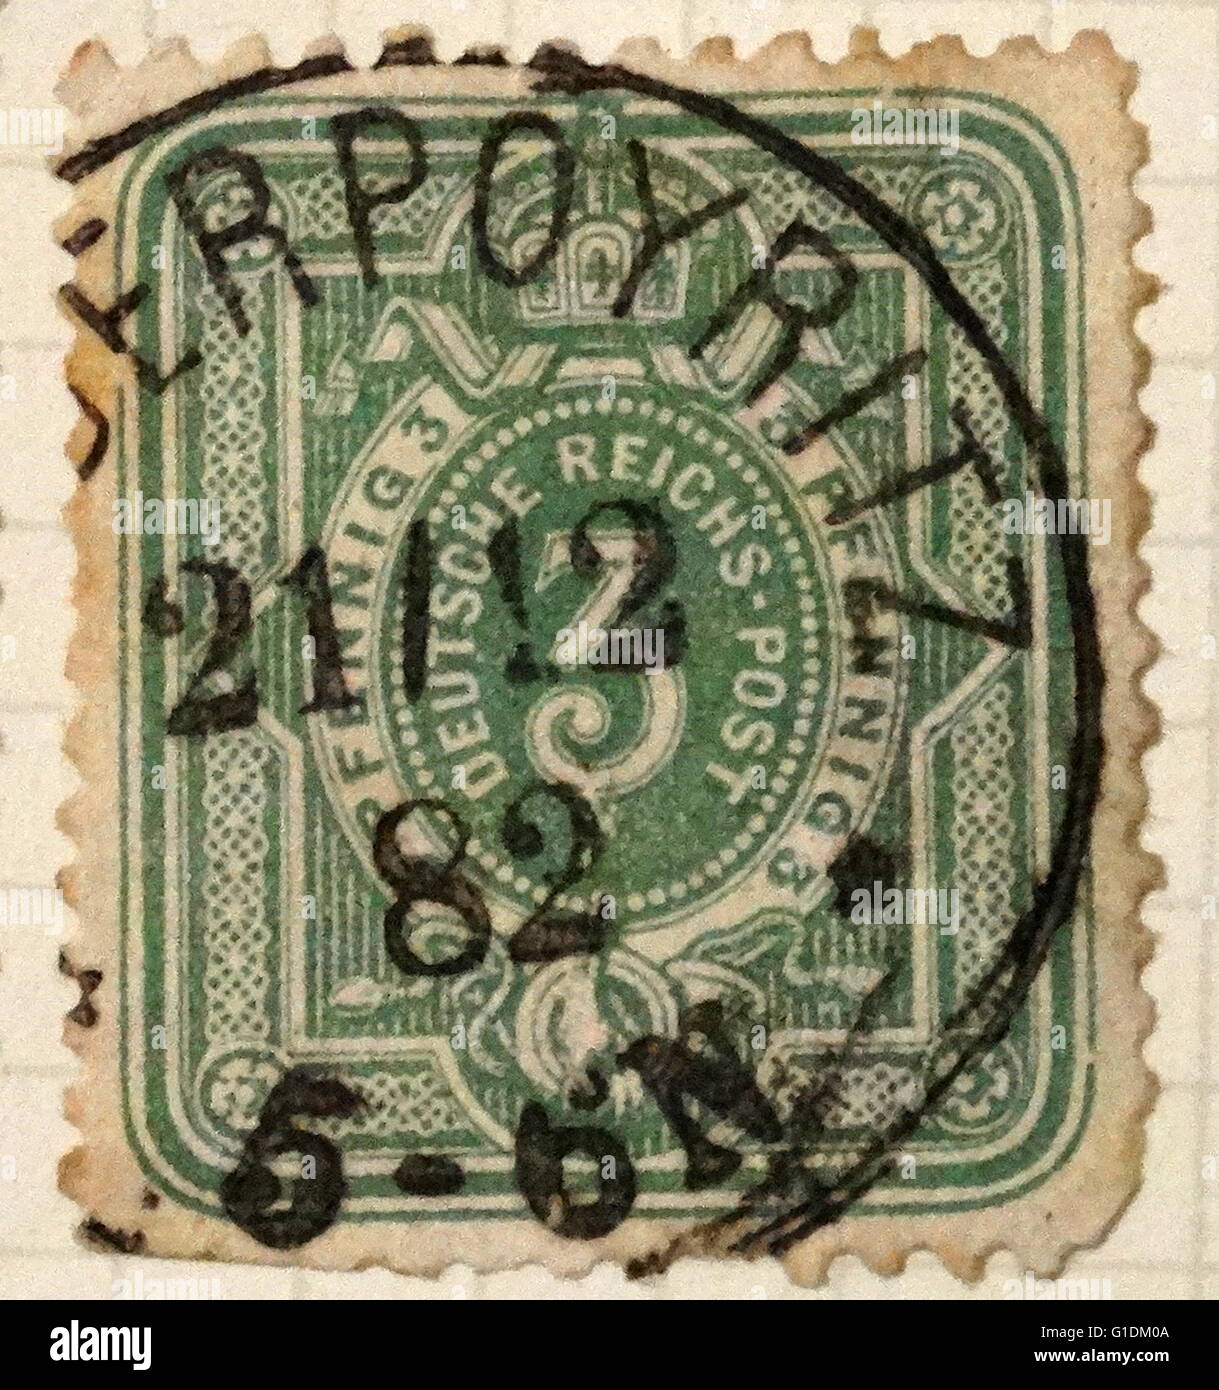 Deutsche Reichspost stamp used during the Second World War. Dated 20th Century Stock Photo